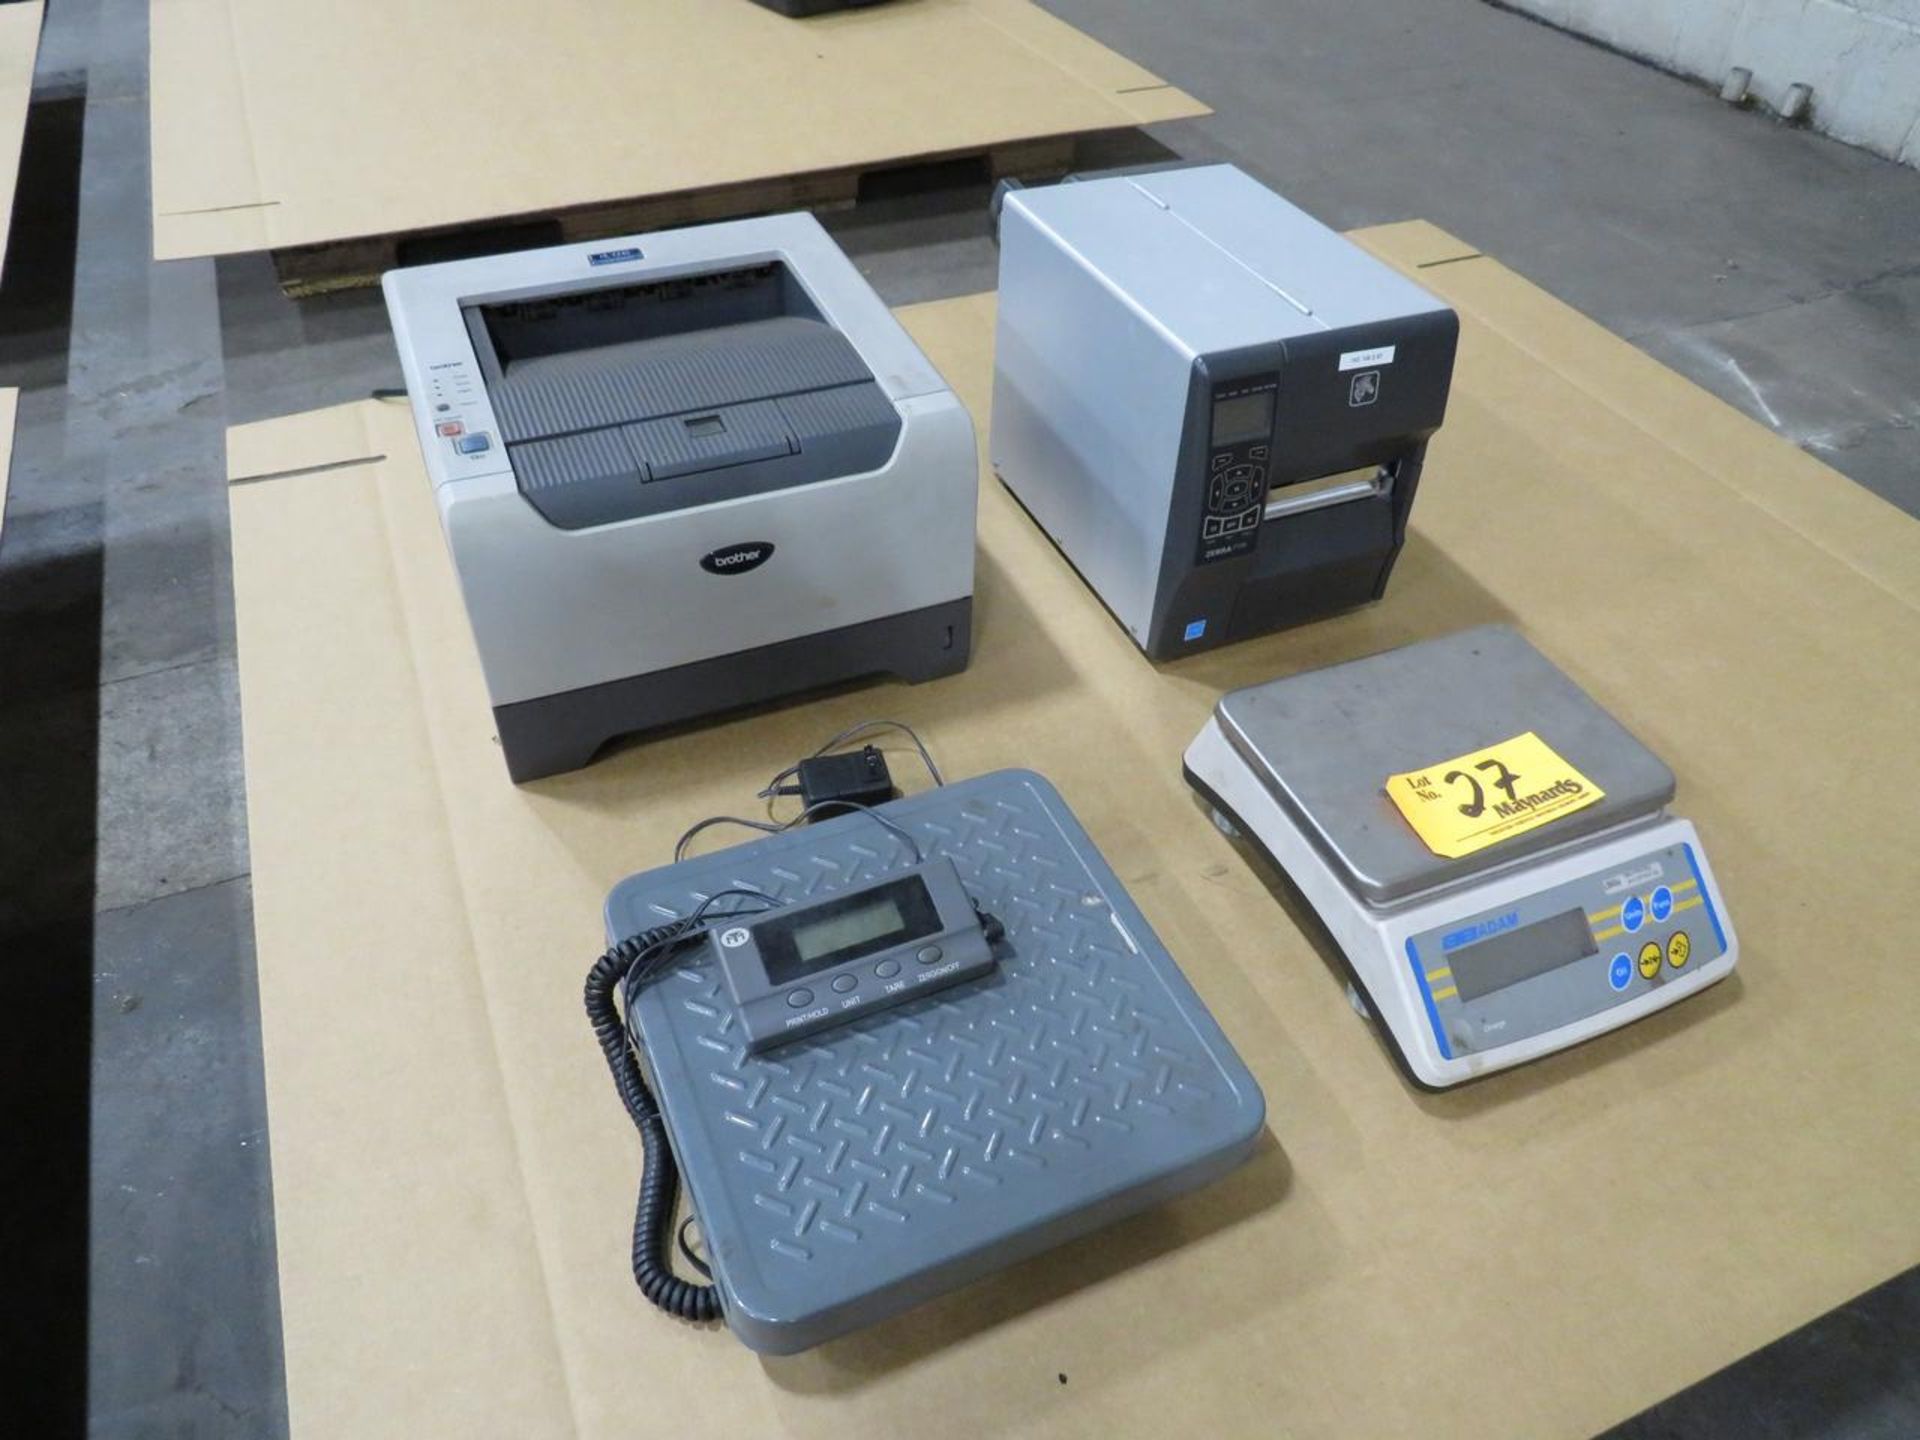 Lot of Scales, Zebra Printer and HP Printer